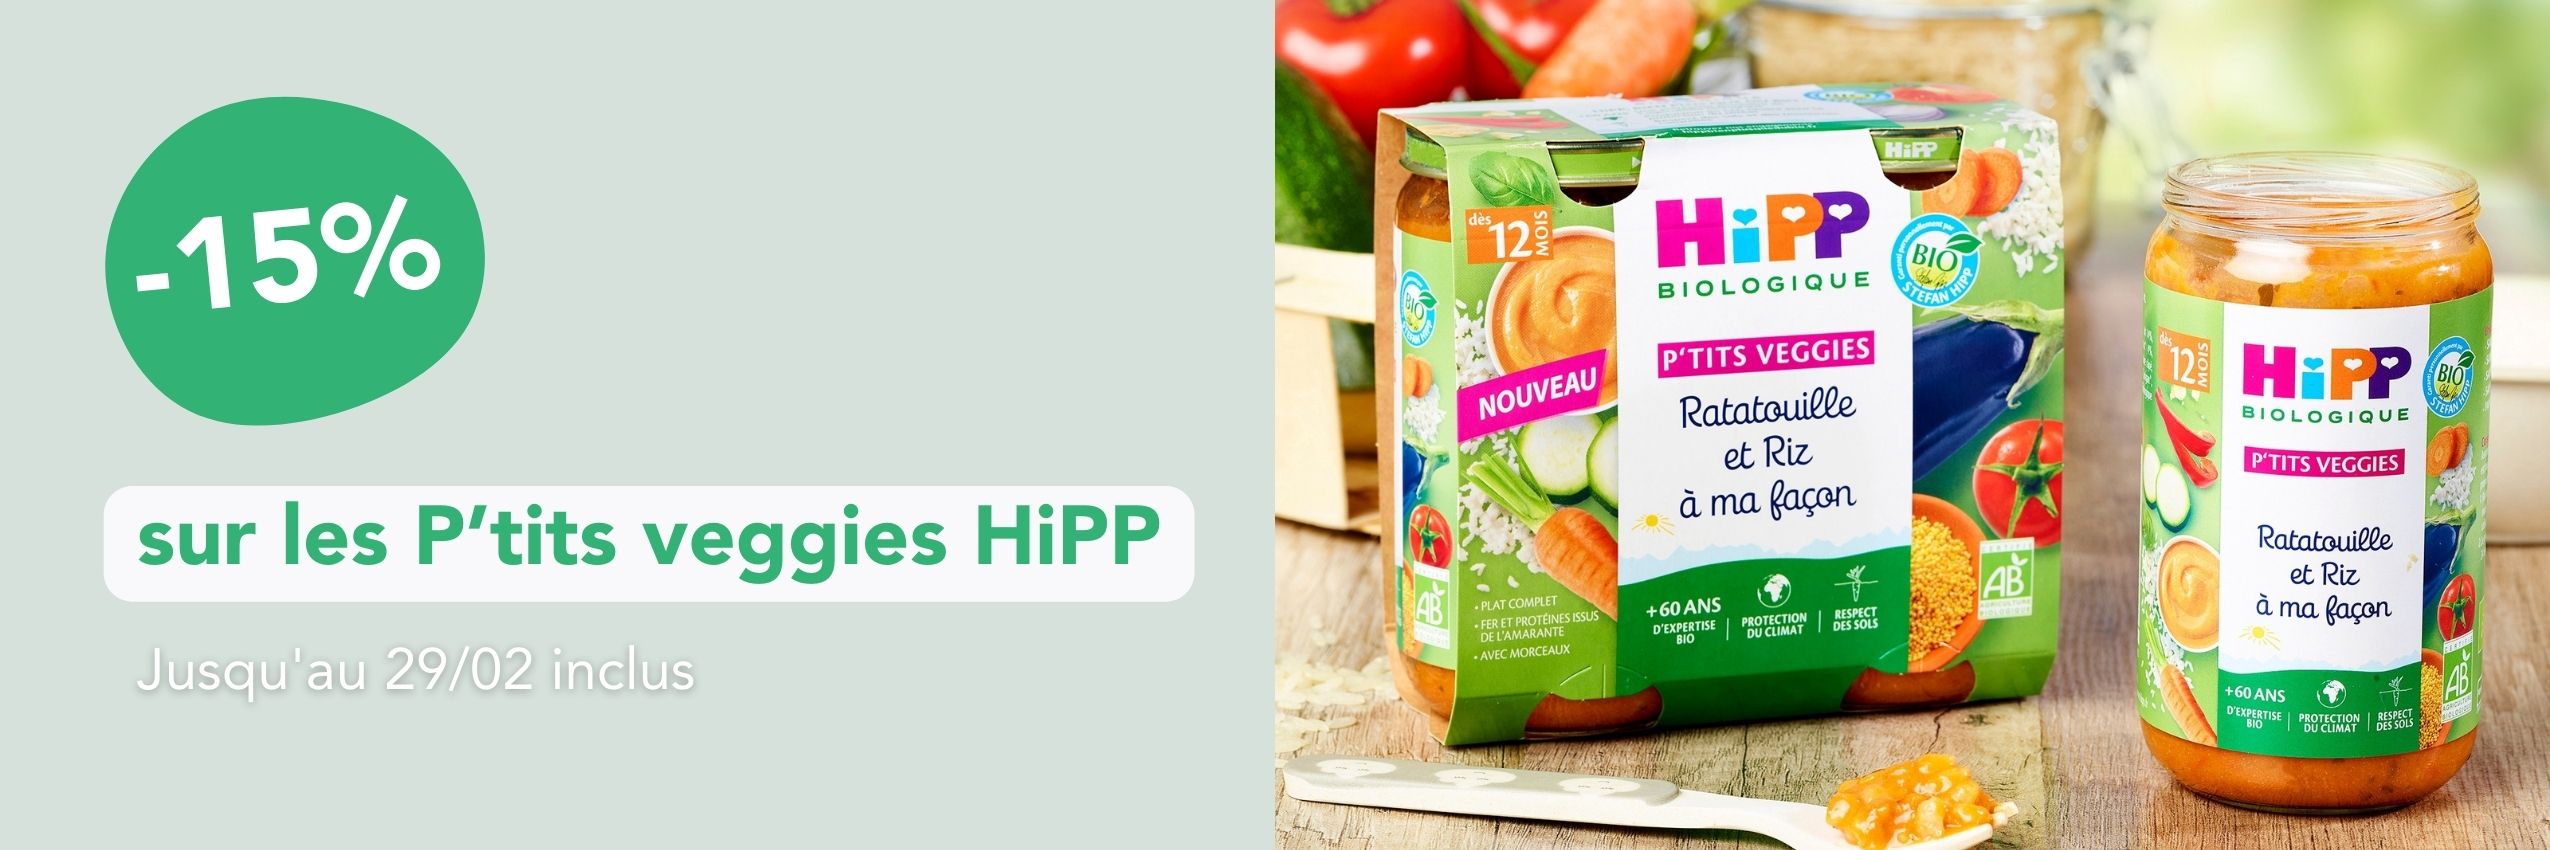 HIPP Ptit veggies 15%